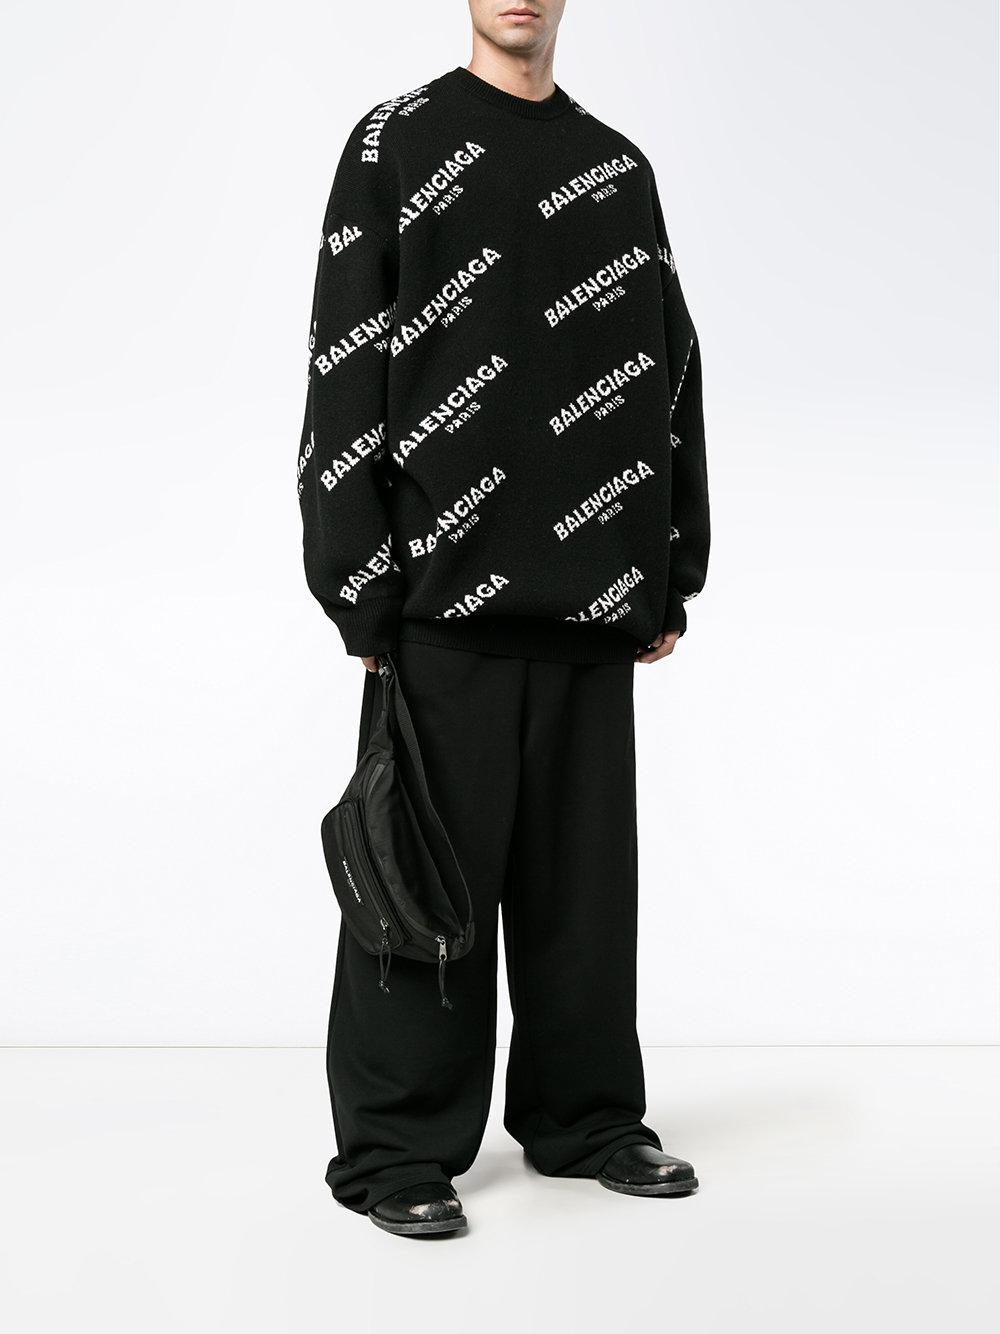 Balenciaga Cotton Slackened Tracksuit Pants in Black for Men - Lyst